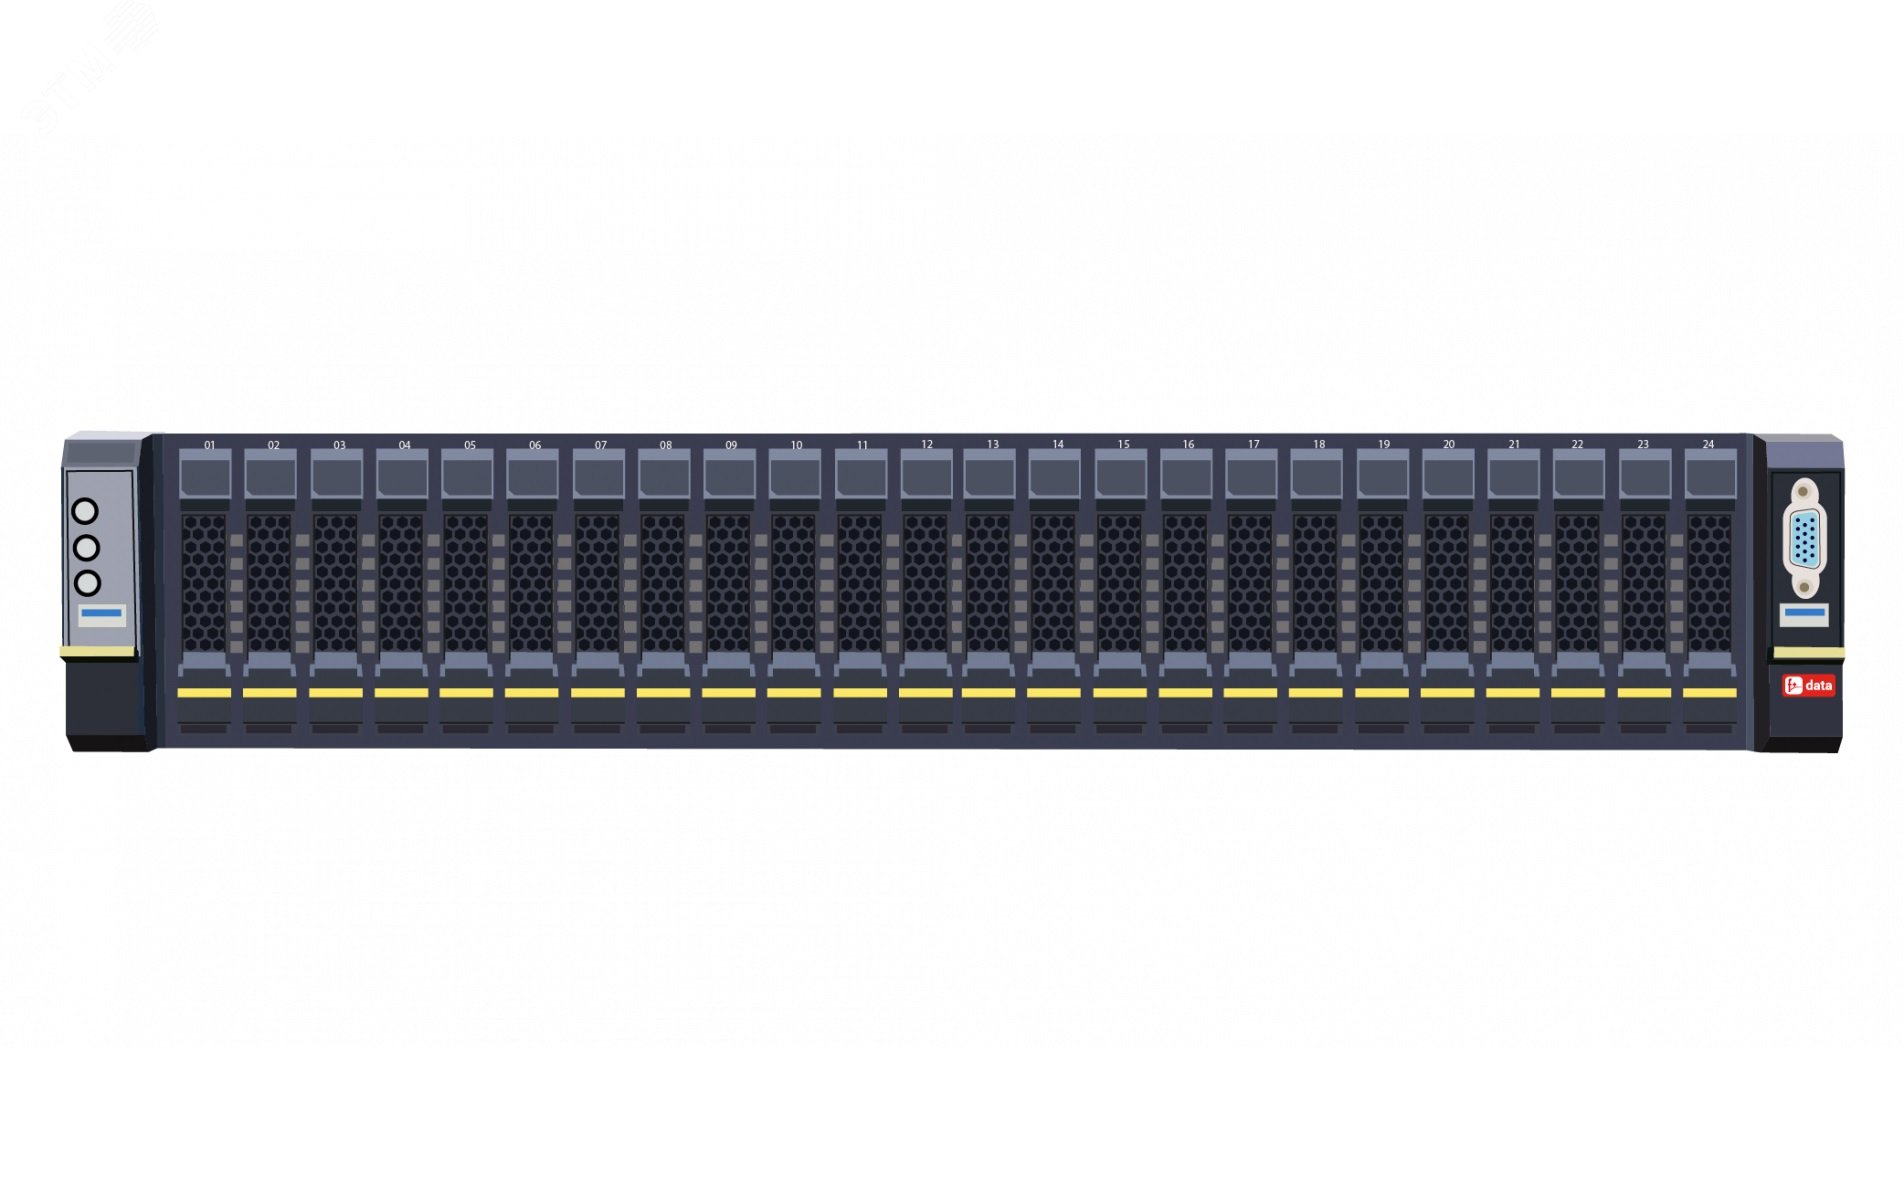 Сервер FPD-15-SP-22035-CTO в составе: 2U 24x2.5'' HDD platform, 1xIntel Xeon Silver 4216 16C 2.10GHz, 1x32GB DDR4-2933 ECC RDIMM, 2x240GB 2.5'' 1.3DWPD SATA SSD, 2x800W PS, Rail FPD-15-SP-22035-CTO-P221-2 F+